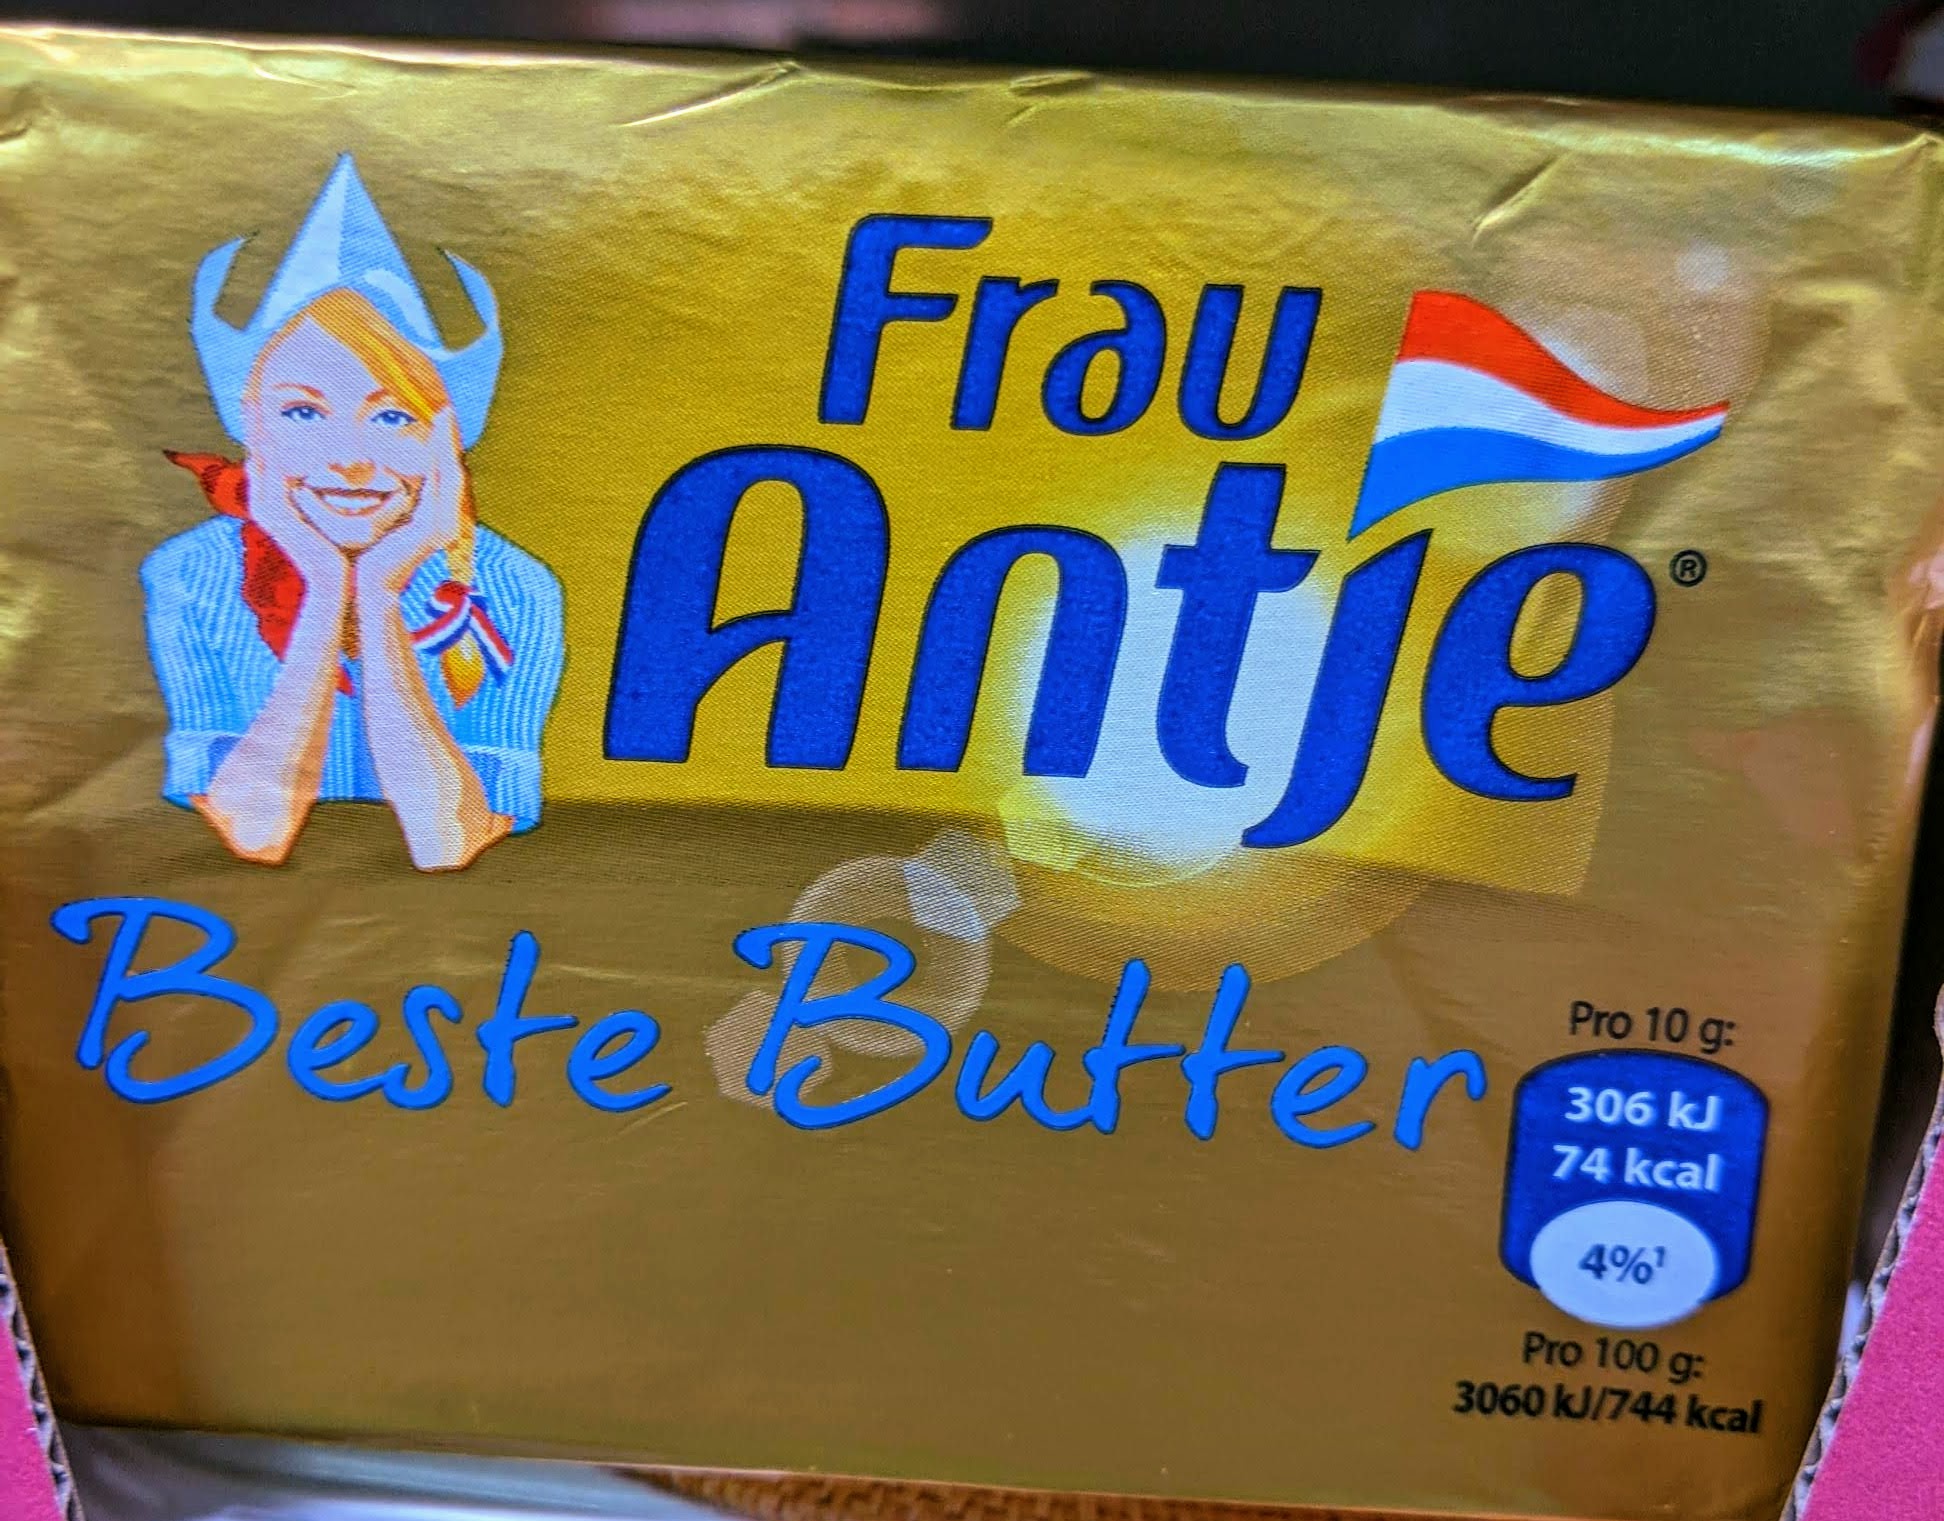 Frau Antje Beste Butter: Hollandrad gewinnen - Kassenbon hochladen